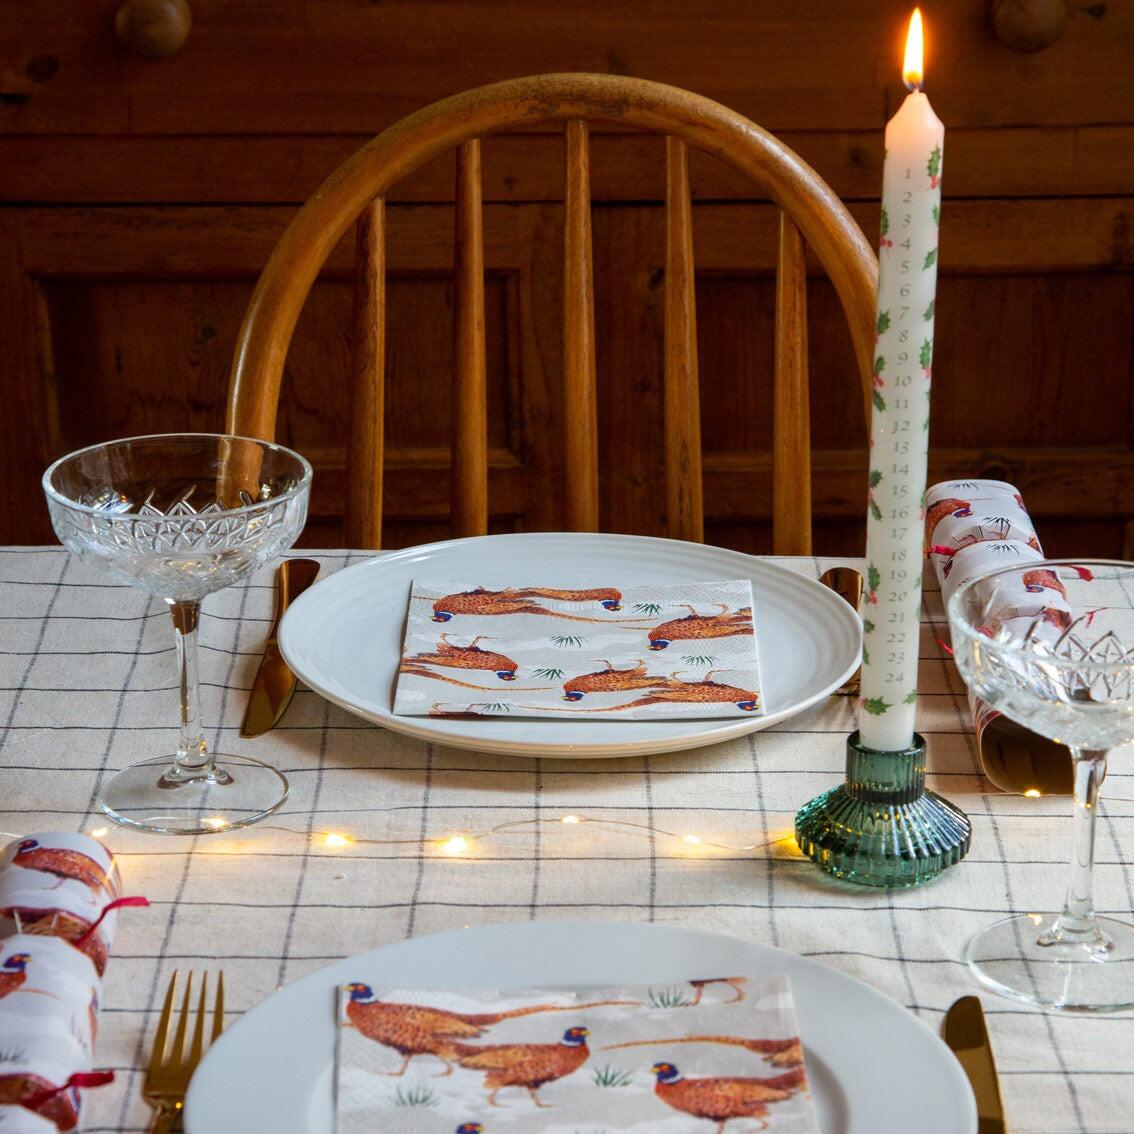 Festive pheasant christmas paper napkins